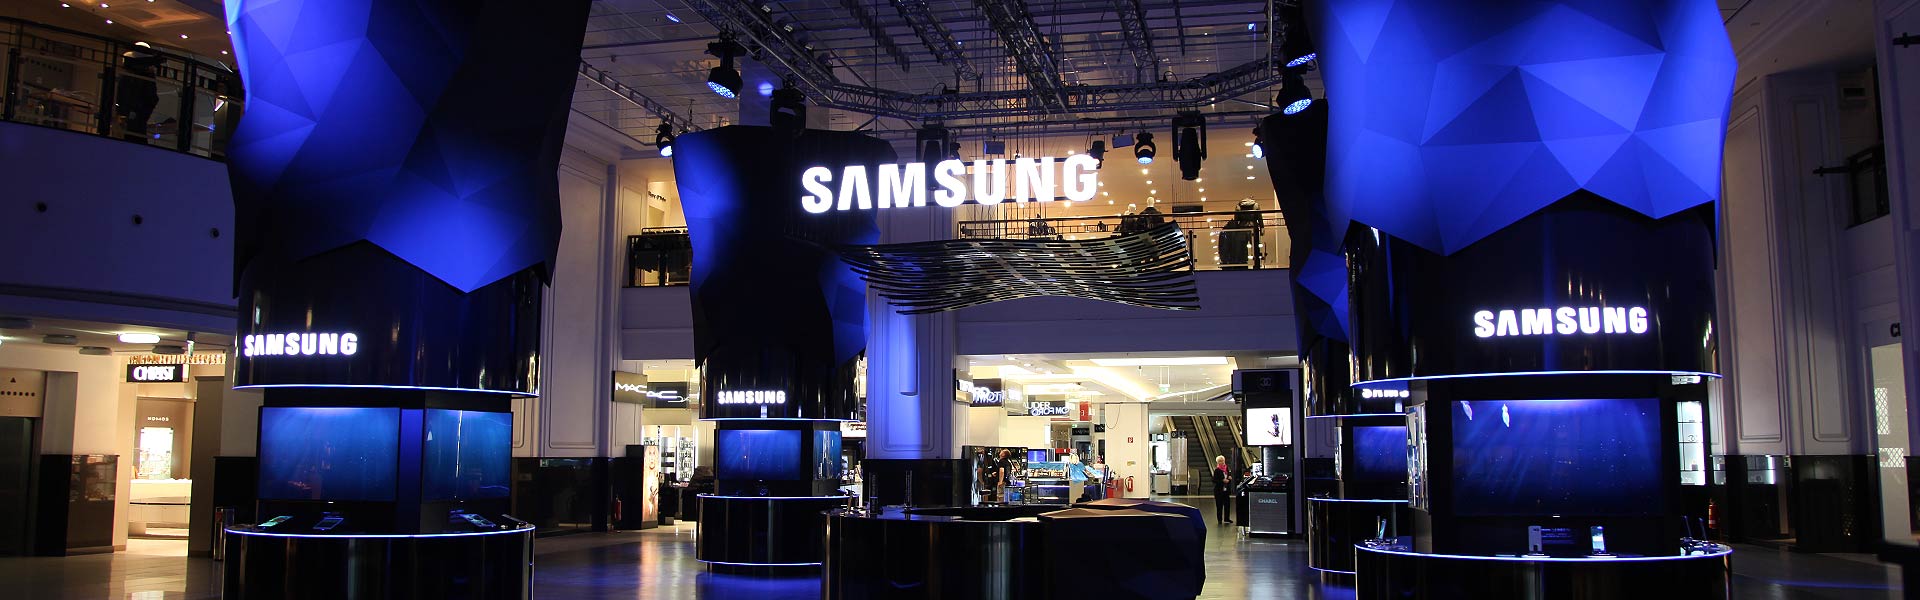 Samsung IFA KaDeWe 2015 Innovating Evolution Next is Now Schaufenster Atrium VIP Dinner Inner Circle Event